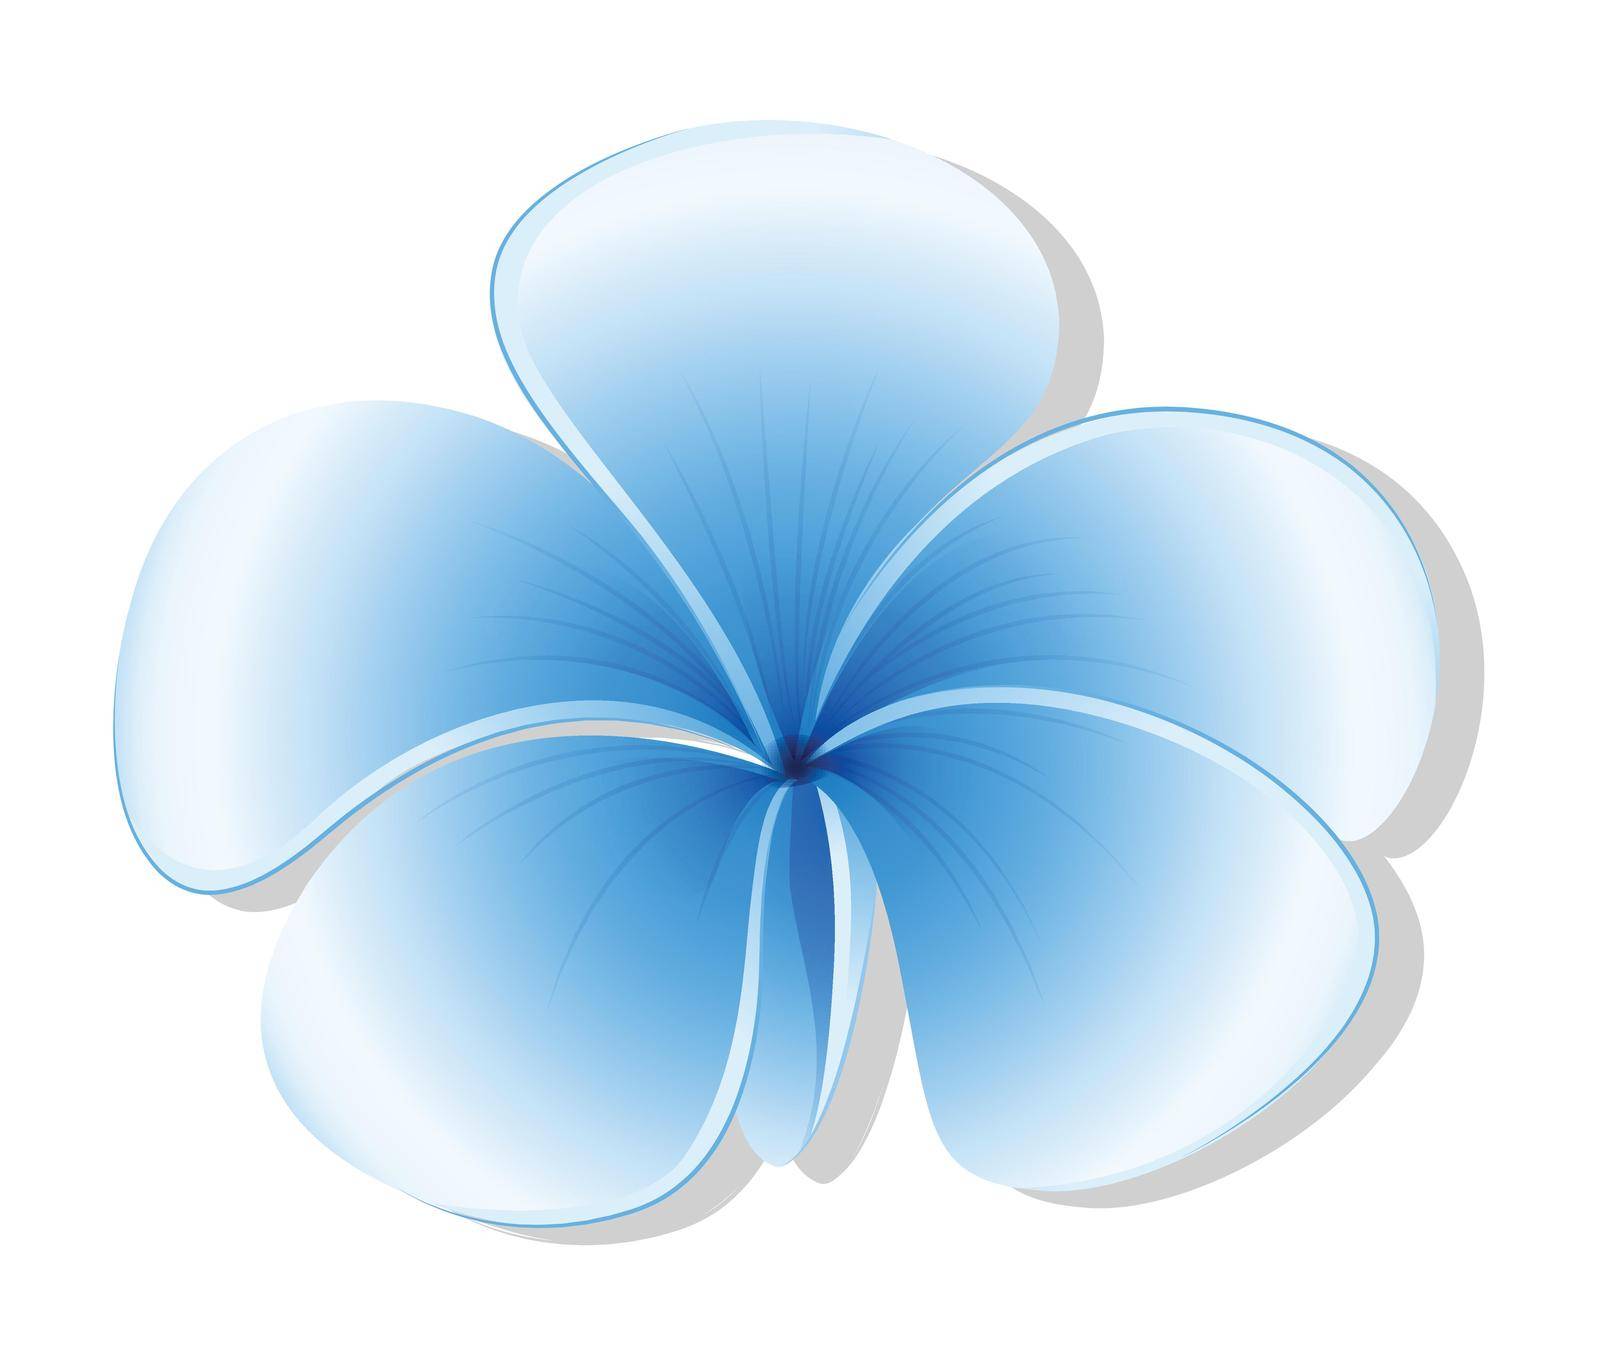 Illustration of a fresh five-petal blue flower on a white background